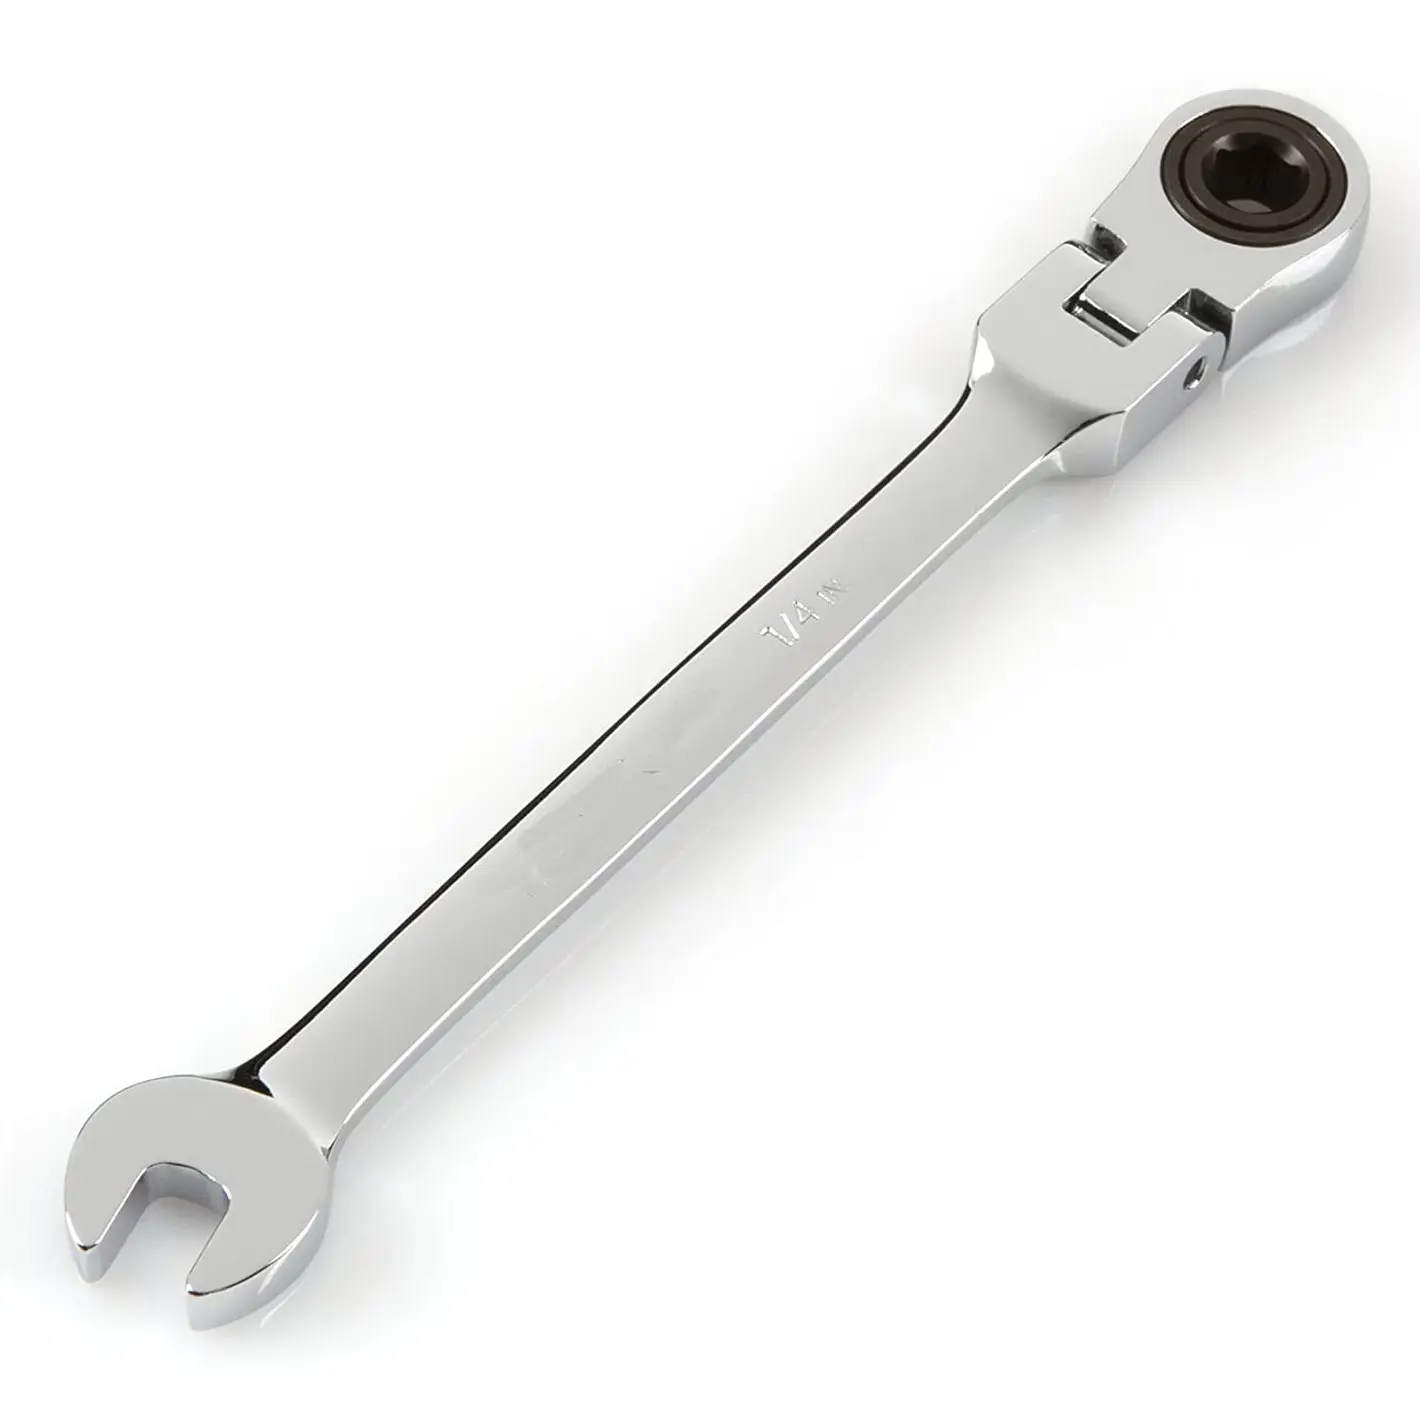 Set di chiavi combinate a 72 marce dimensioni metriche chiave a cricchetto metrica da 6-32mm chiave a cricchetto a testa regolabile